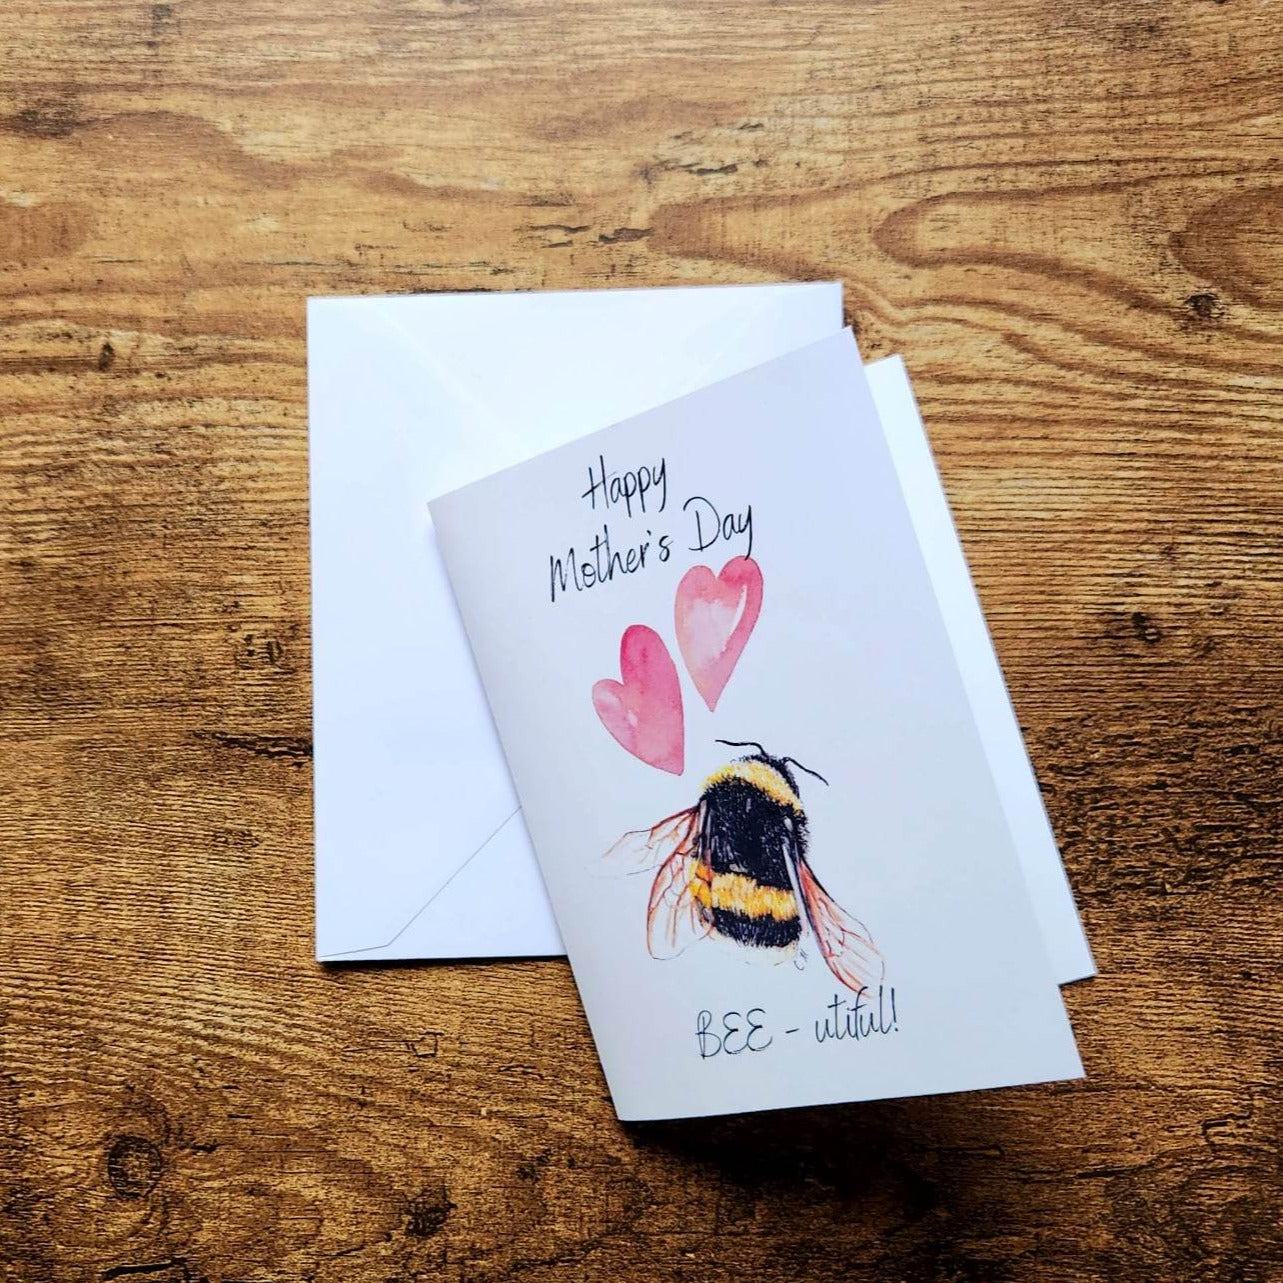 Happy Mother's Day bee-utiful, Beautiful card for mom, Mother's Day card, Wife Mother's day card, Bee pun card, Cute bee card, Appreciation